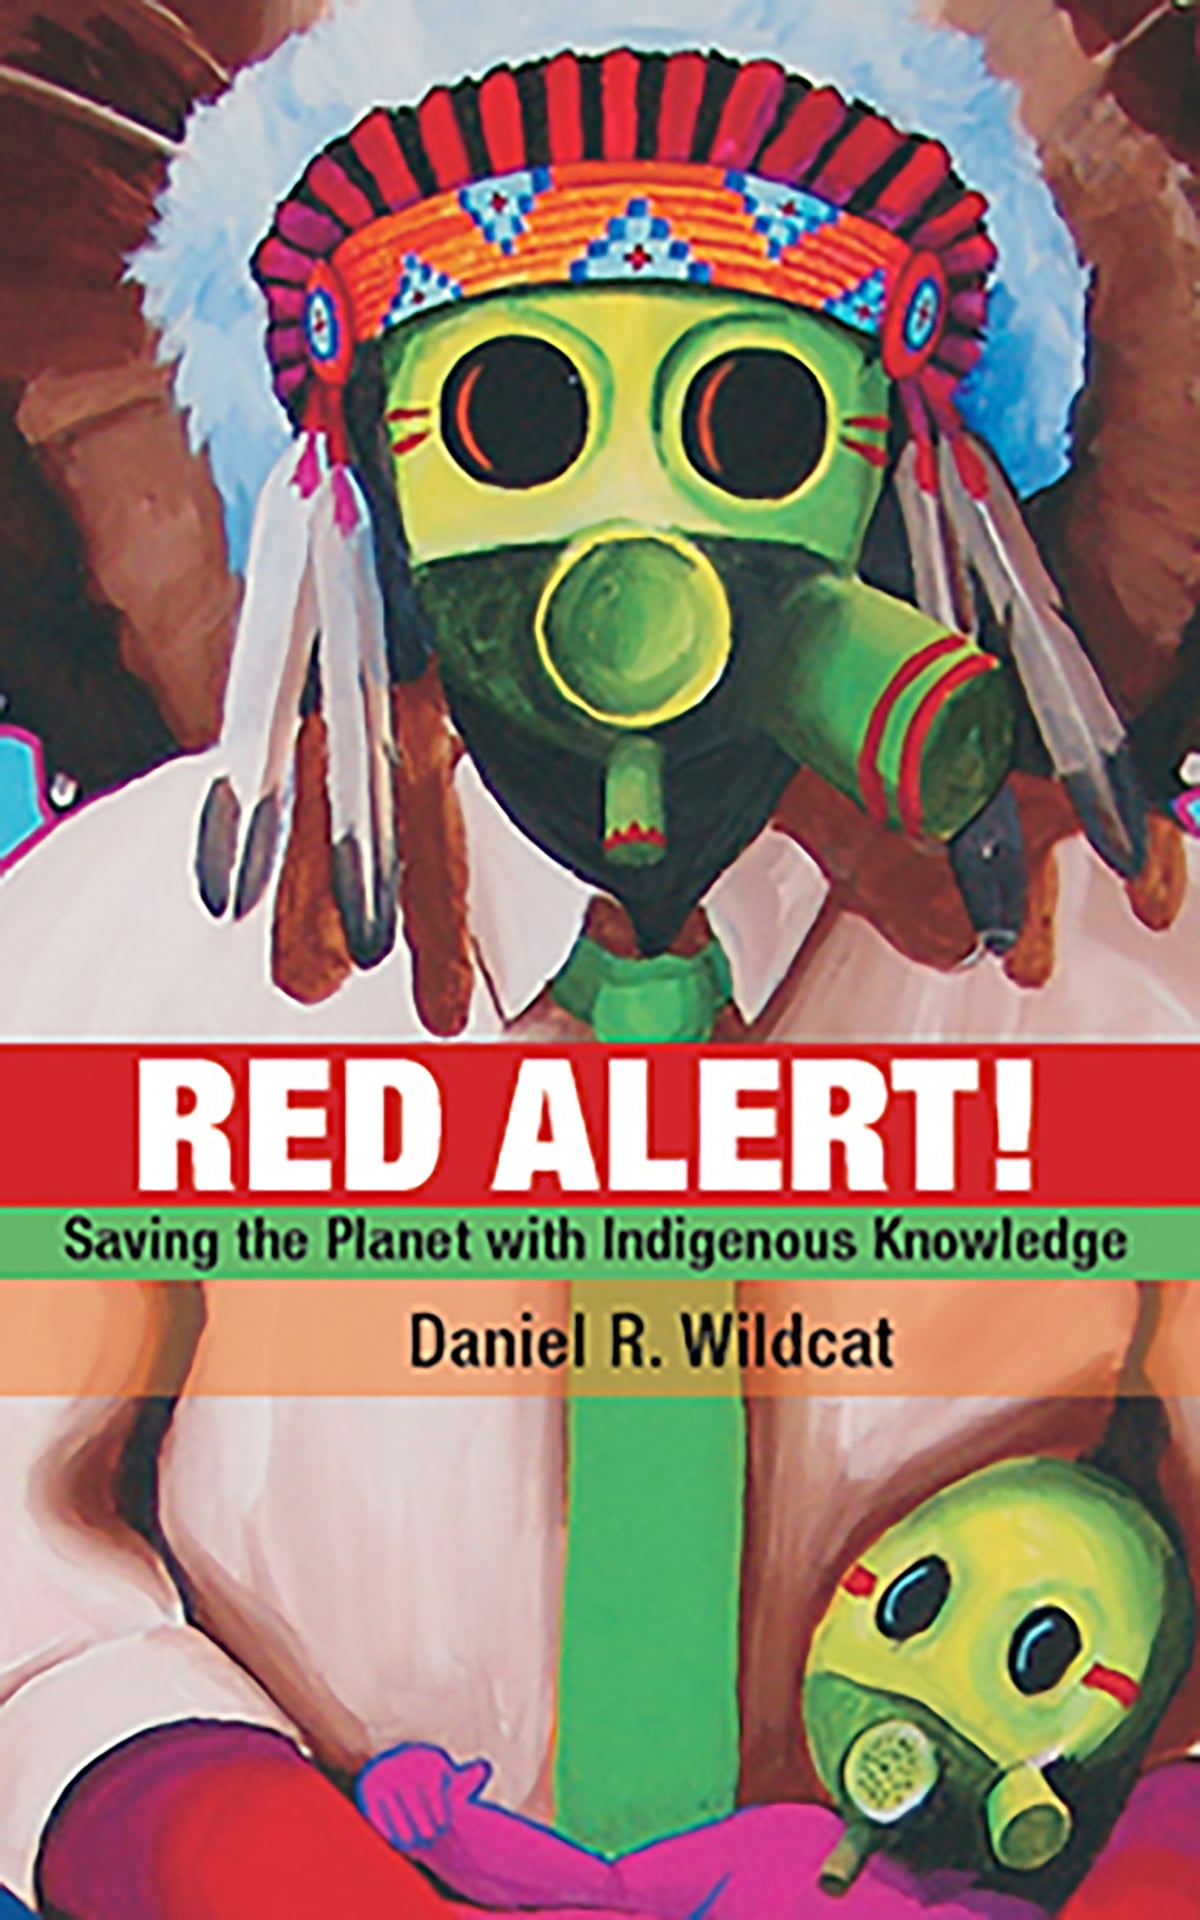 Daniel R. Wildcat: Red Alert! (2010, ReadHowYouWant.com, Limited)